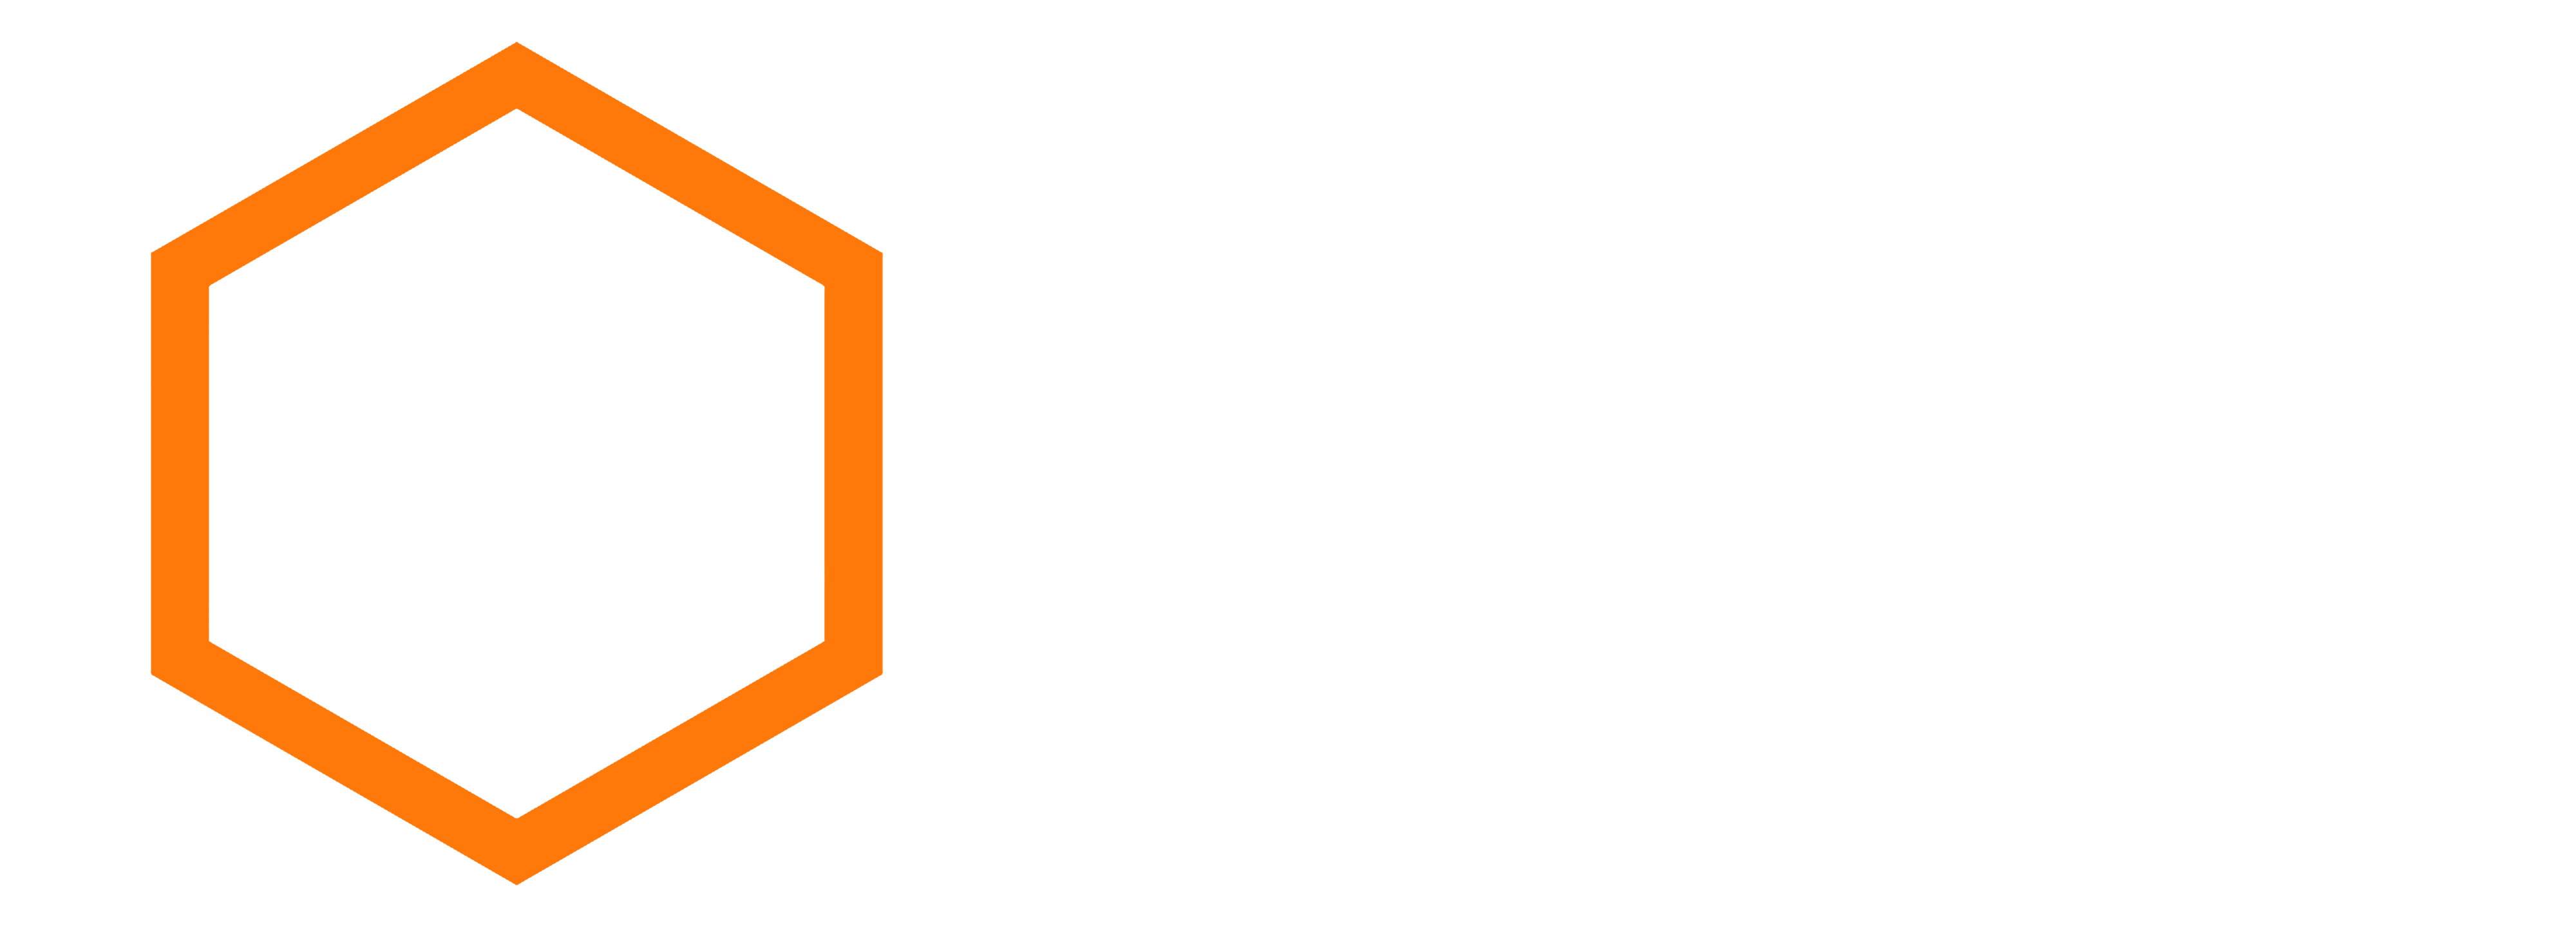 San Consulting logo